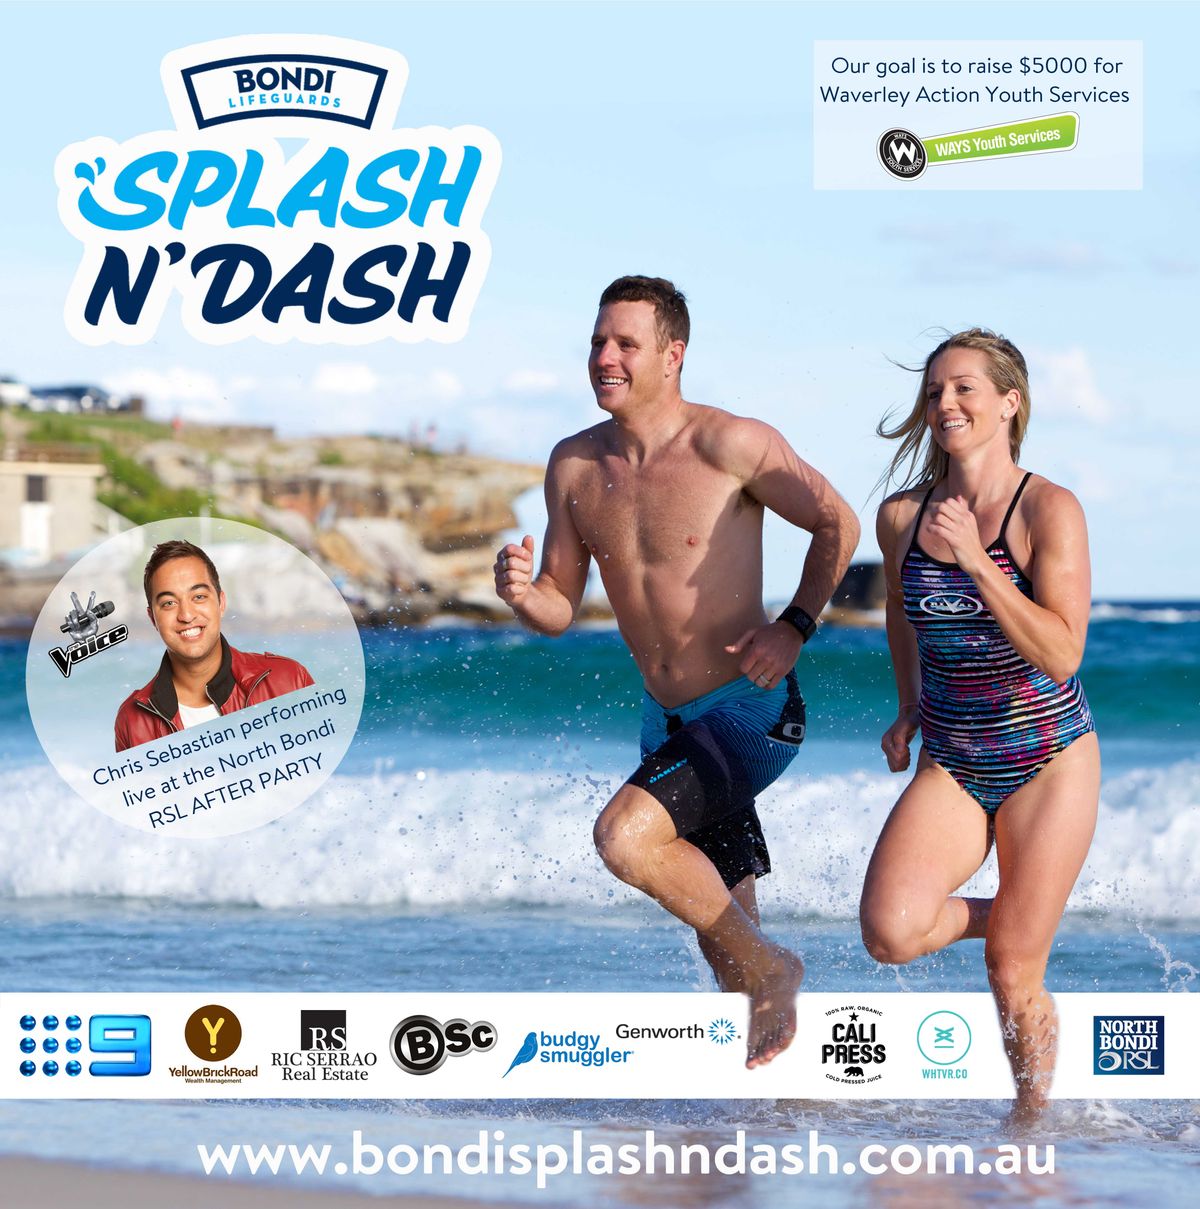 Bondi Beach to host inaugural Splash N’ Dash